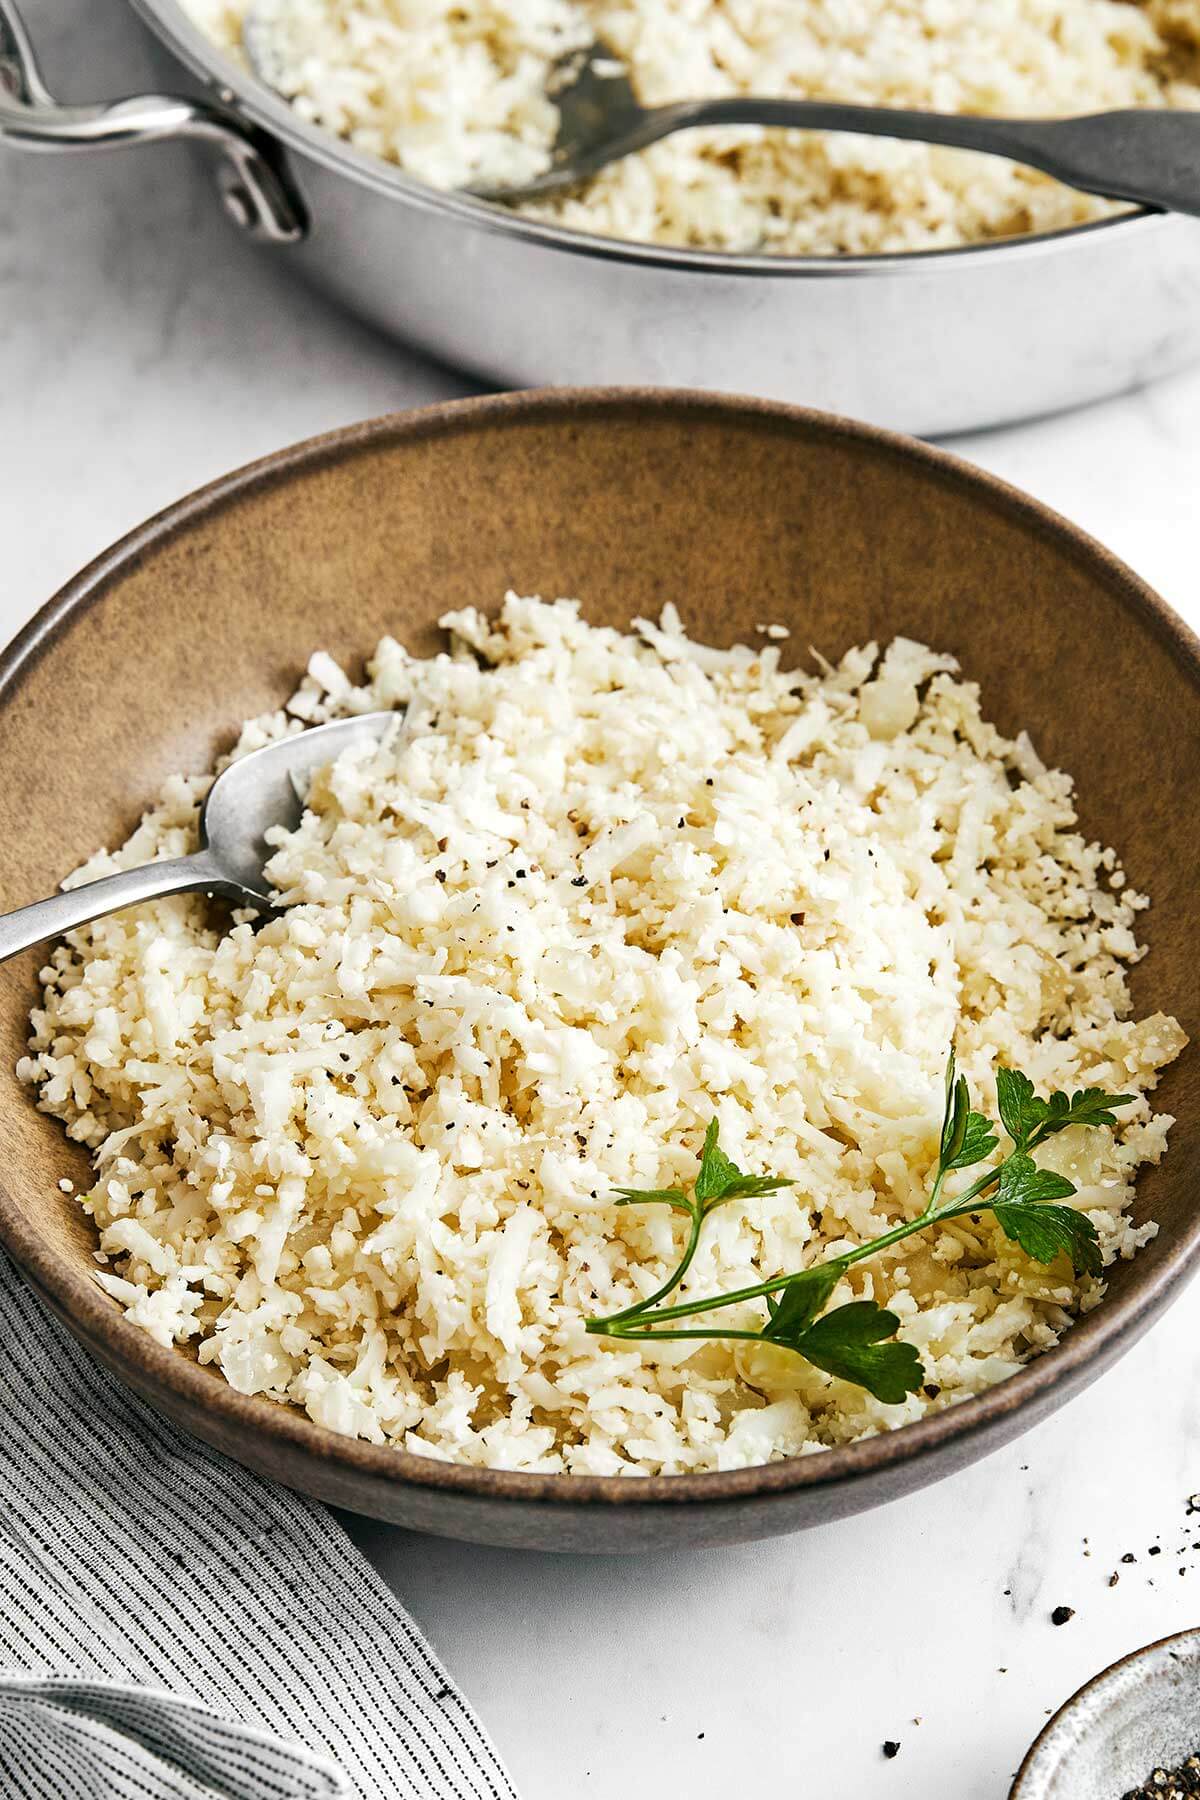 Cauliflower rice in a bowl.